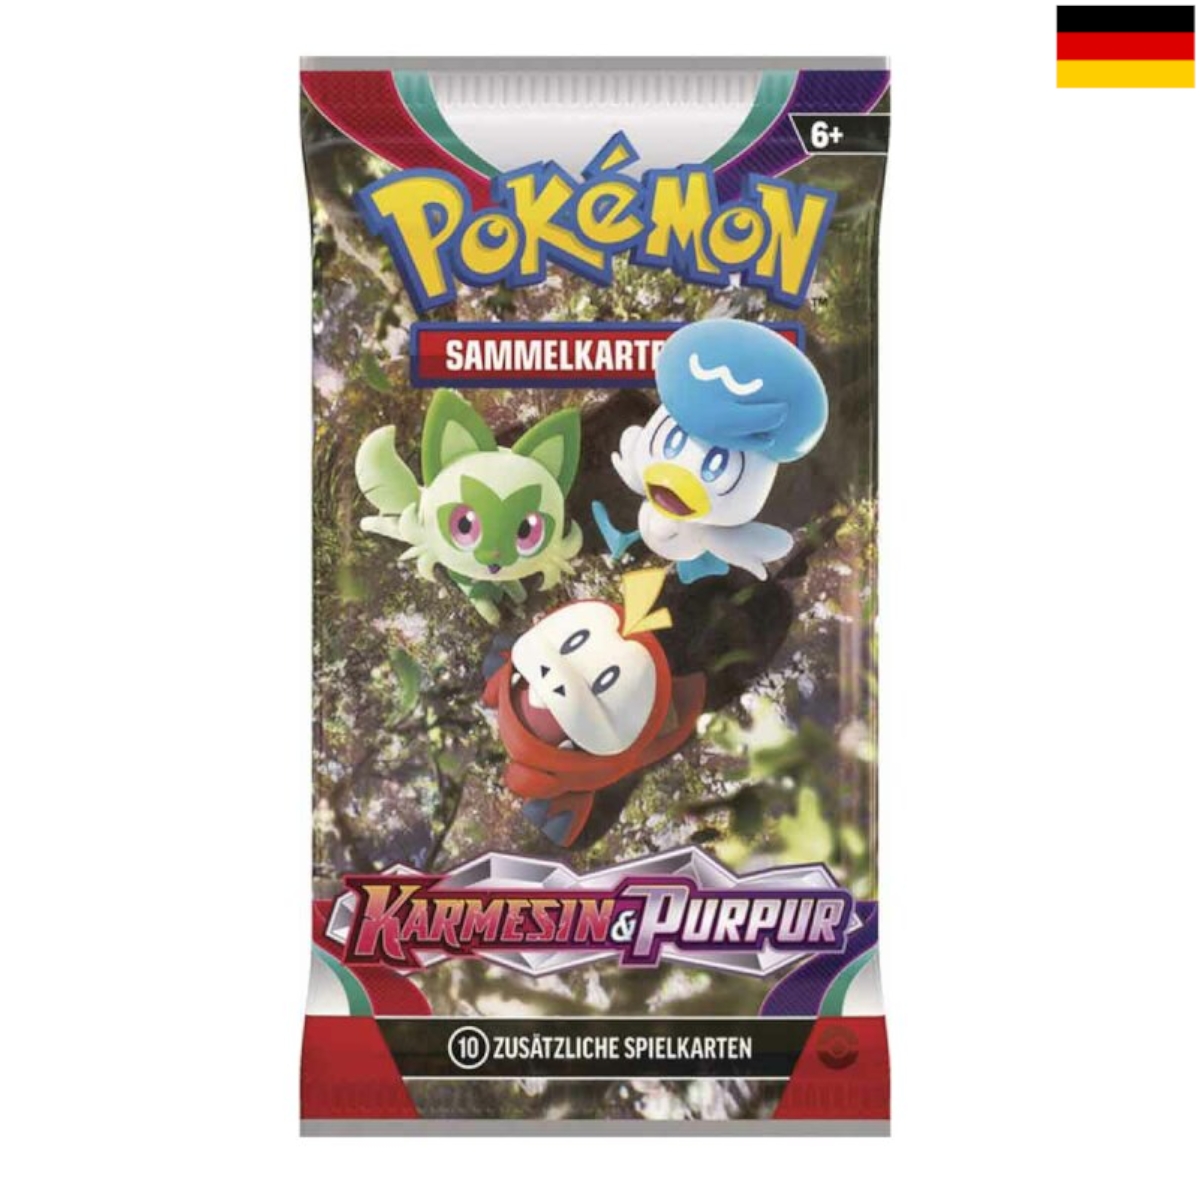 Pokémon - Karmesin & Purpur Booster